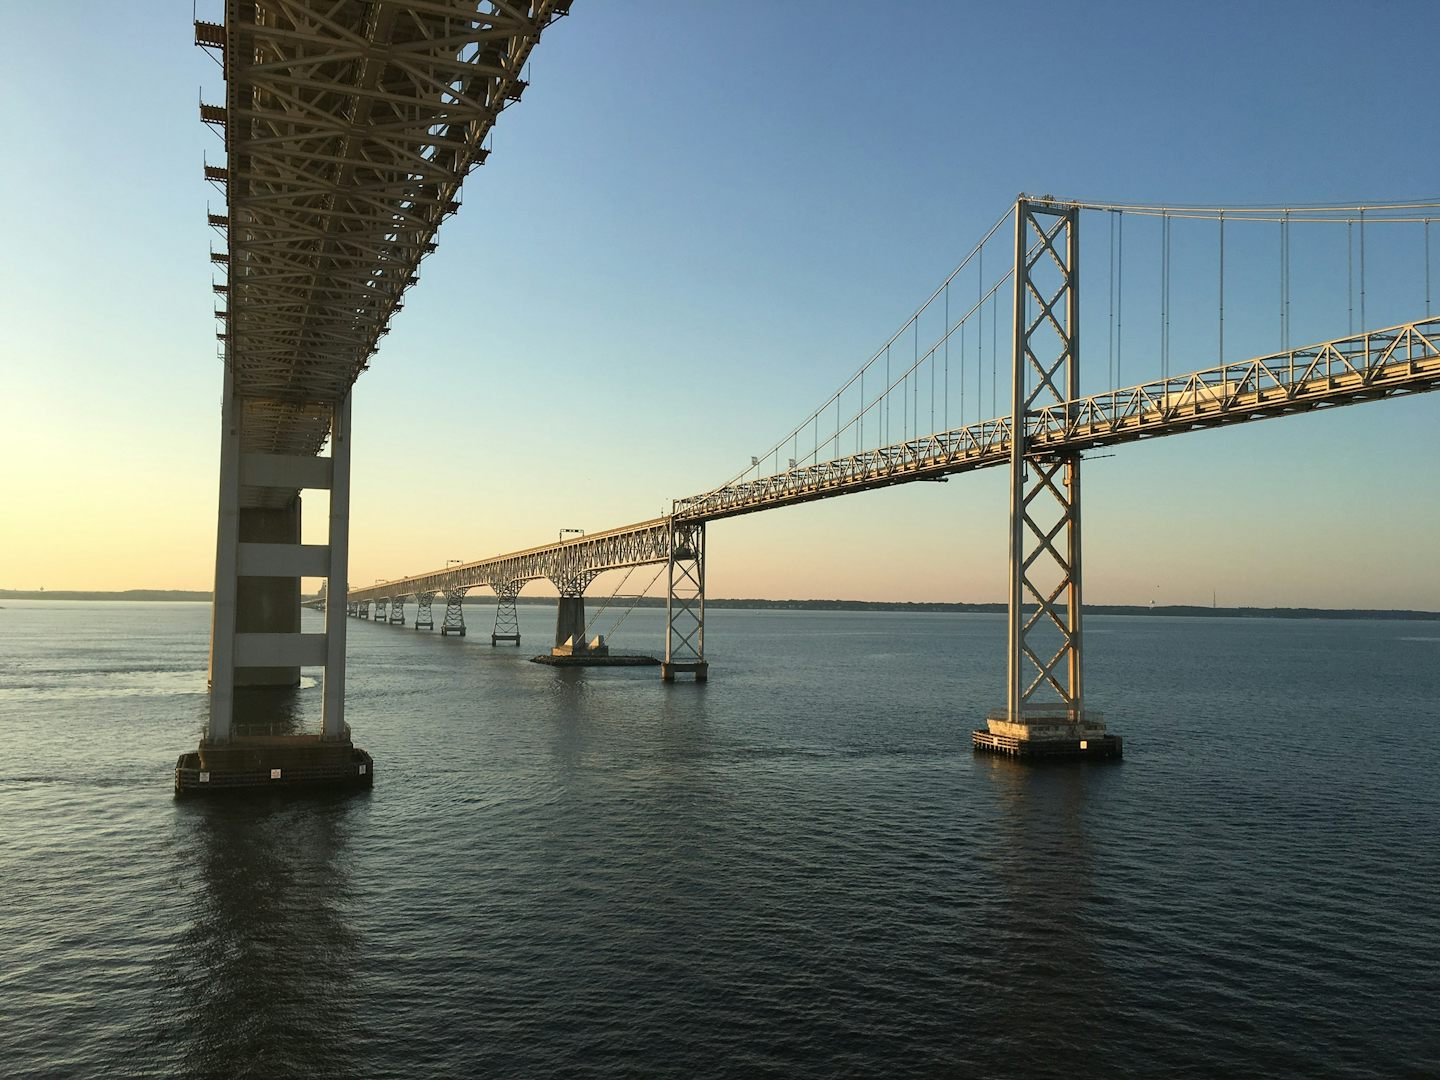 Chesapeake Bay Bridge - almost home!